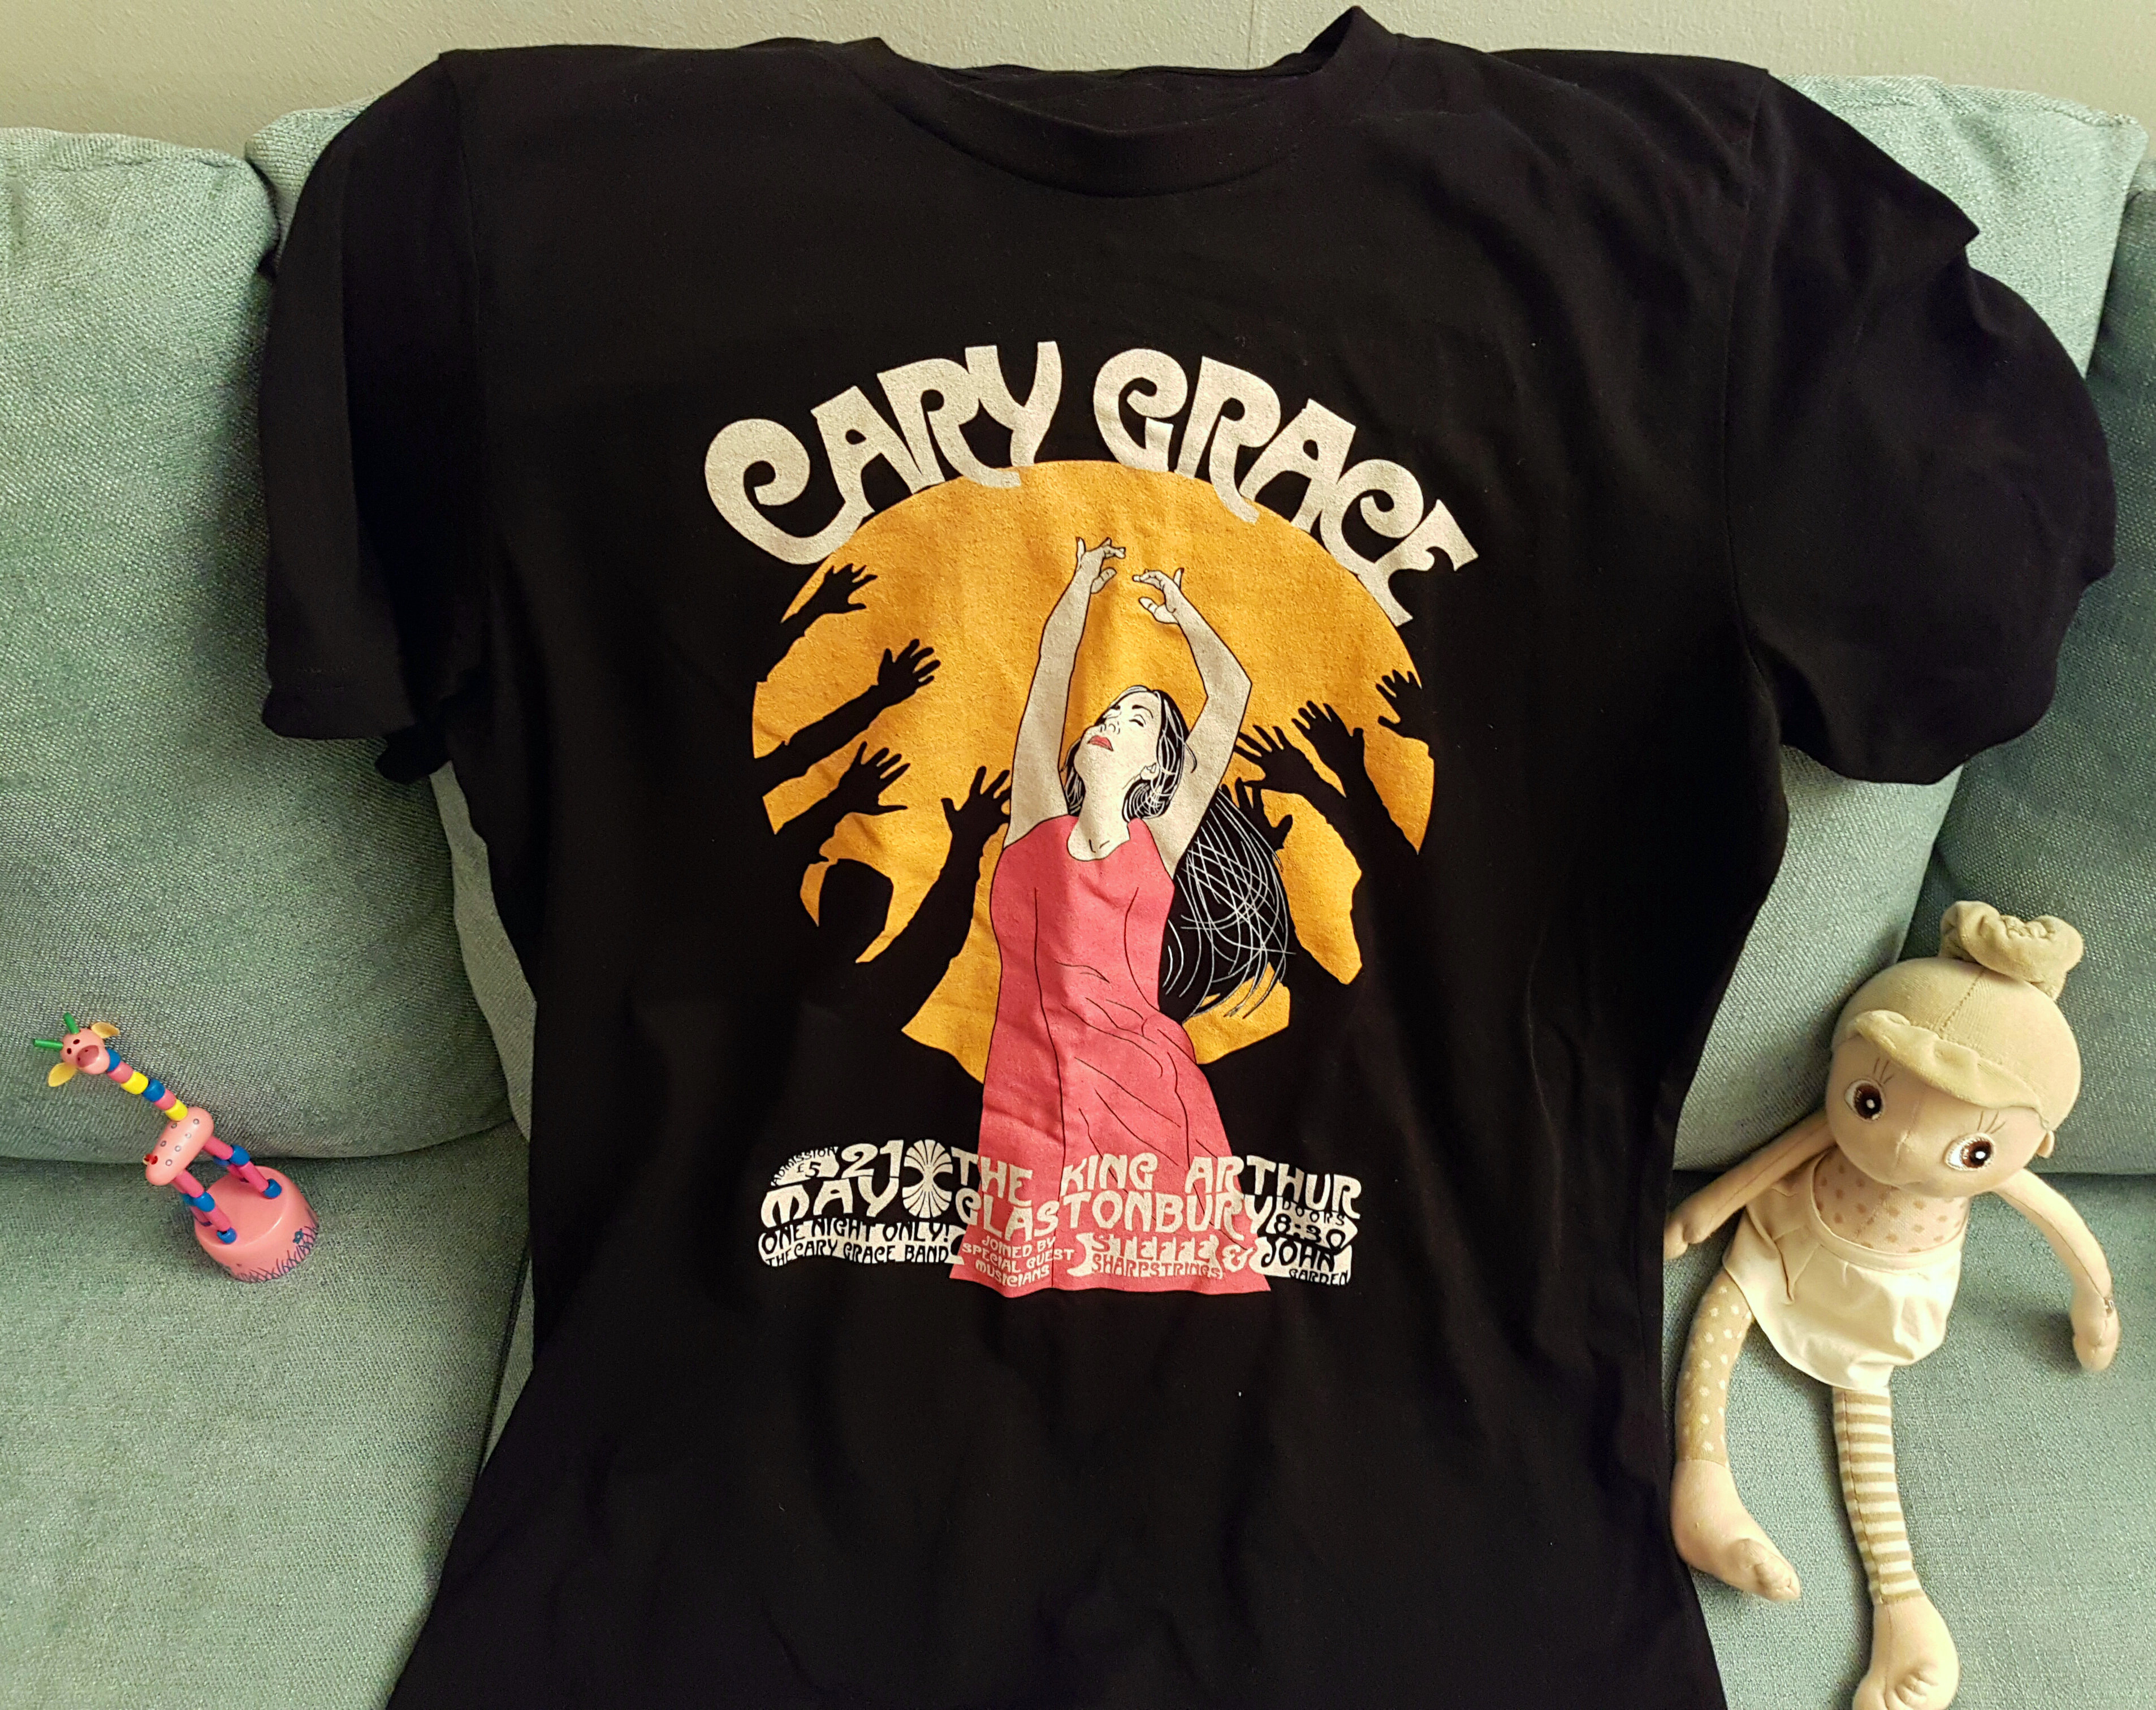 Cary Grace T-shirt.